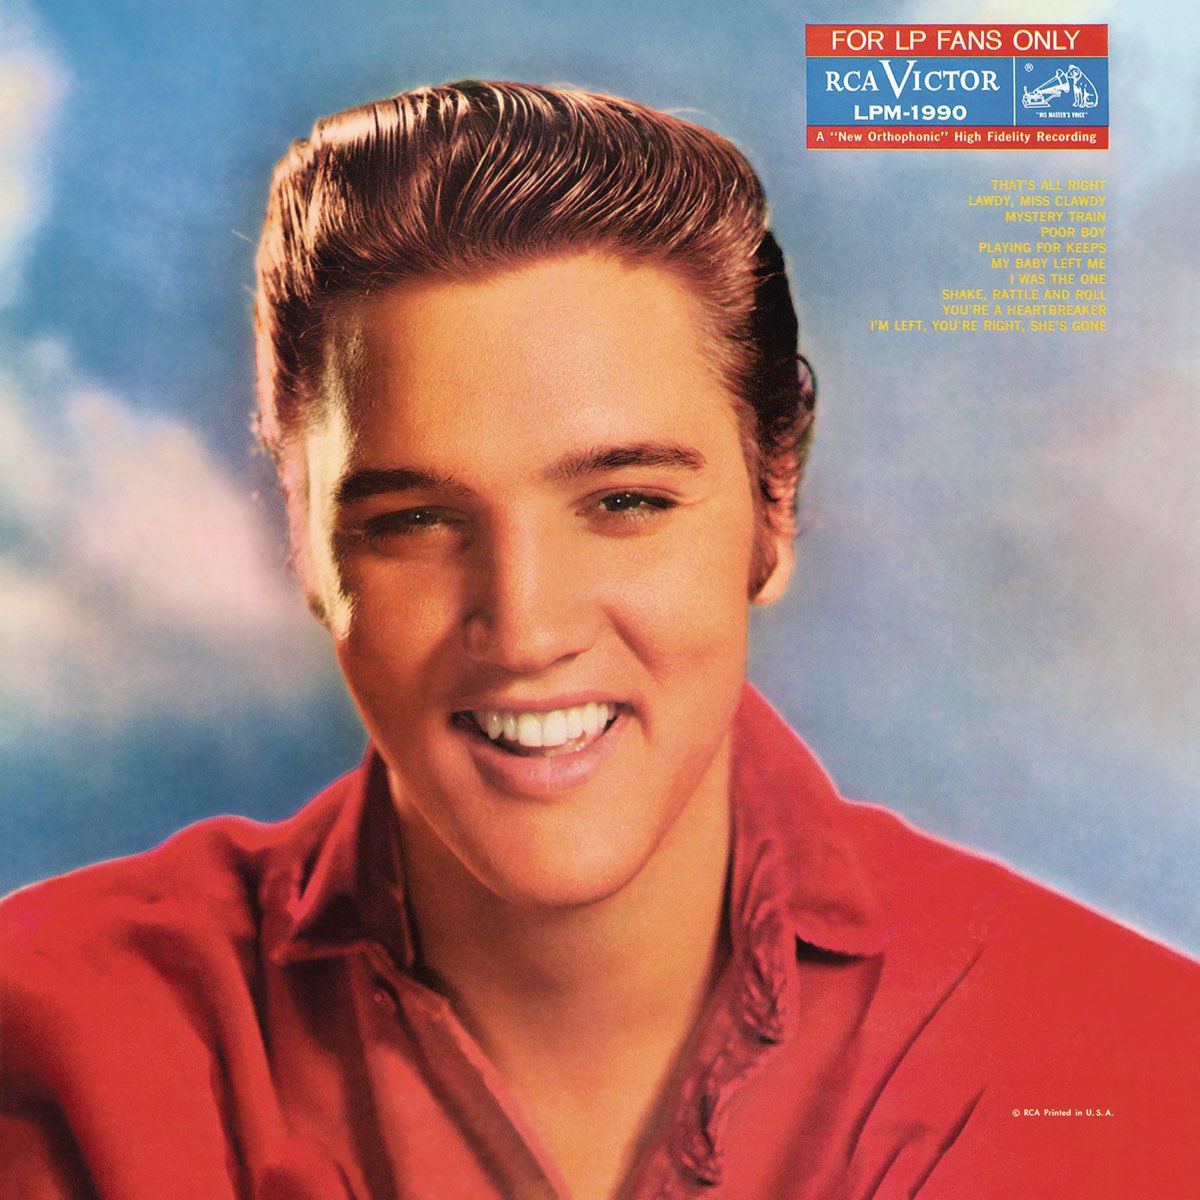 For LP Fans Only - Album by Elvis Presley - Apple Music